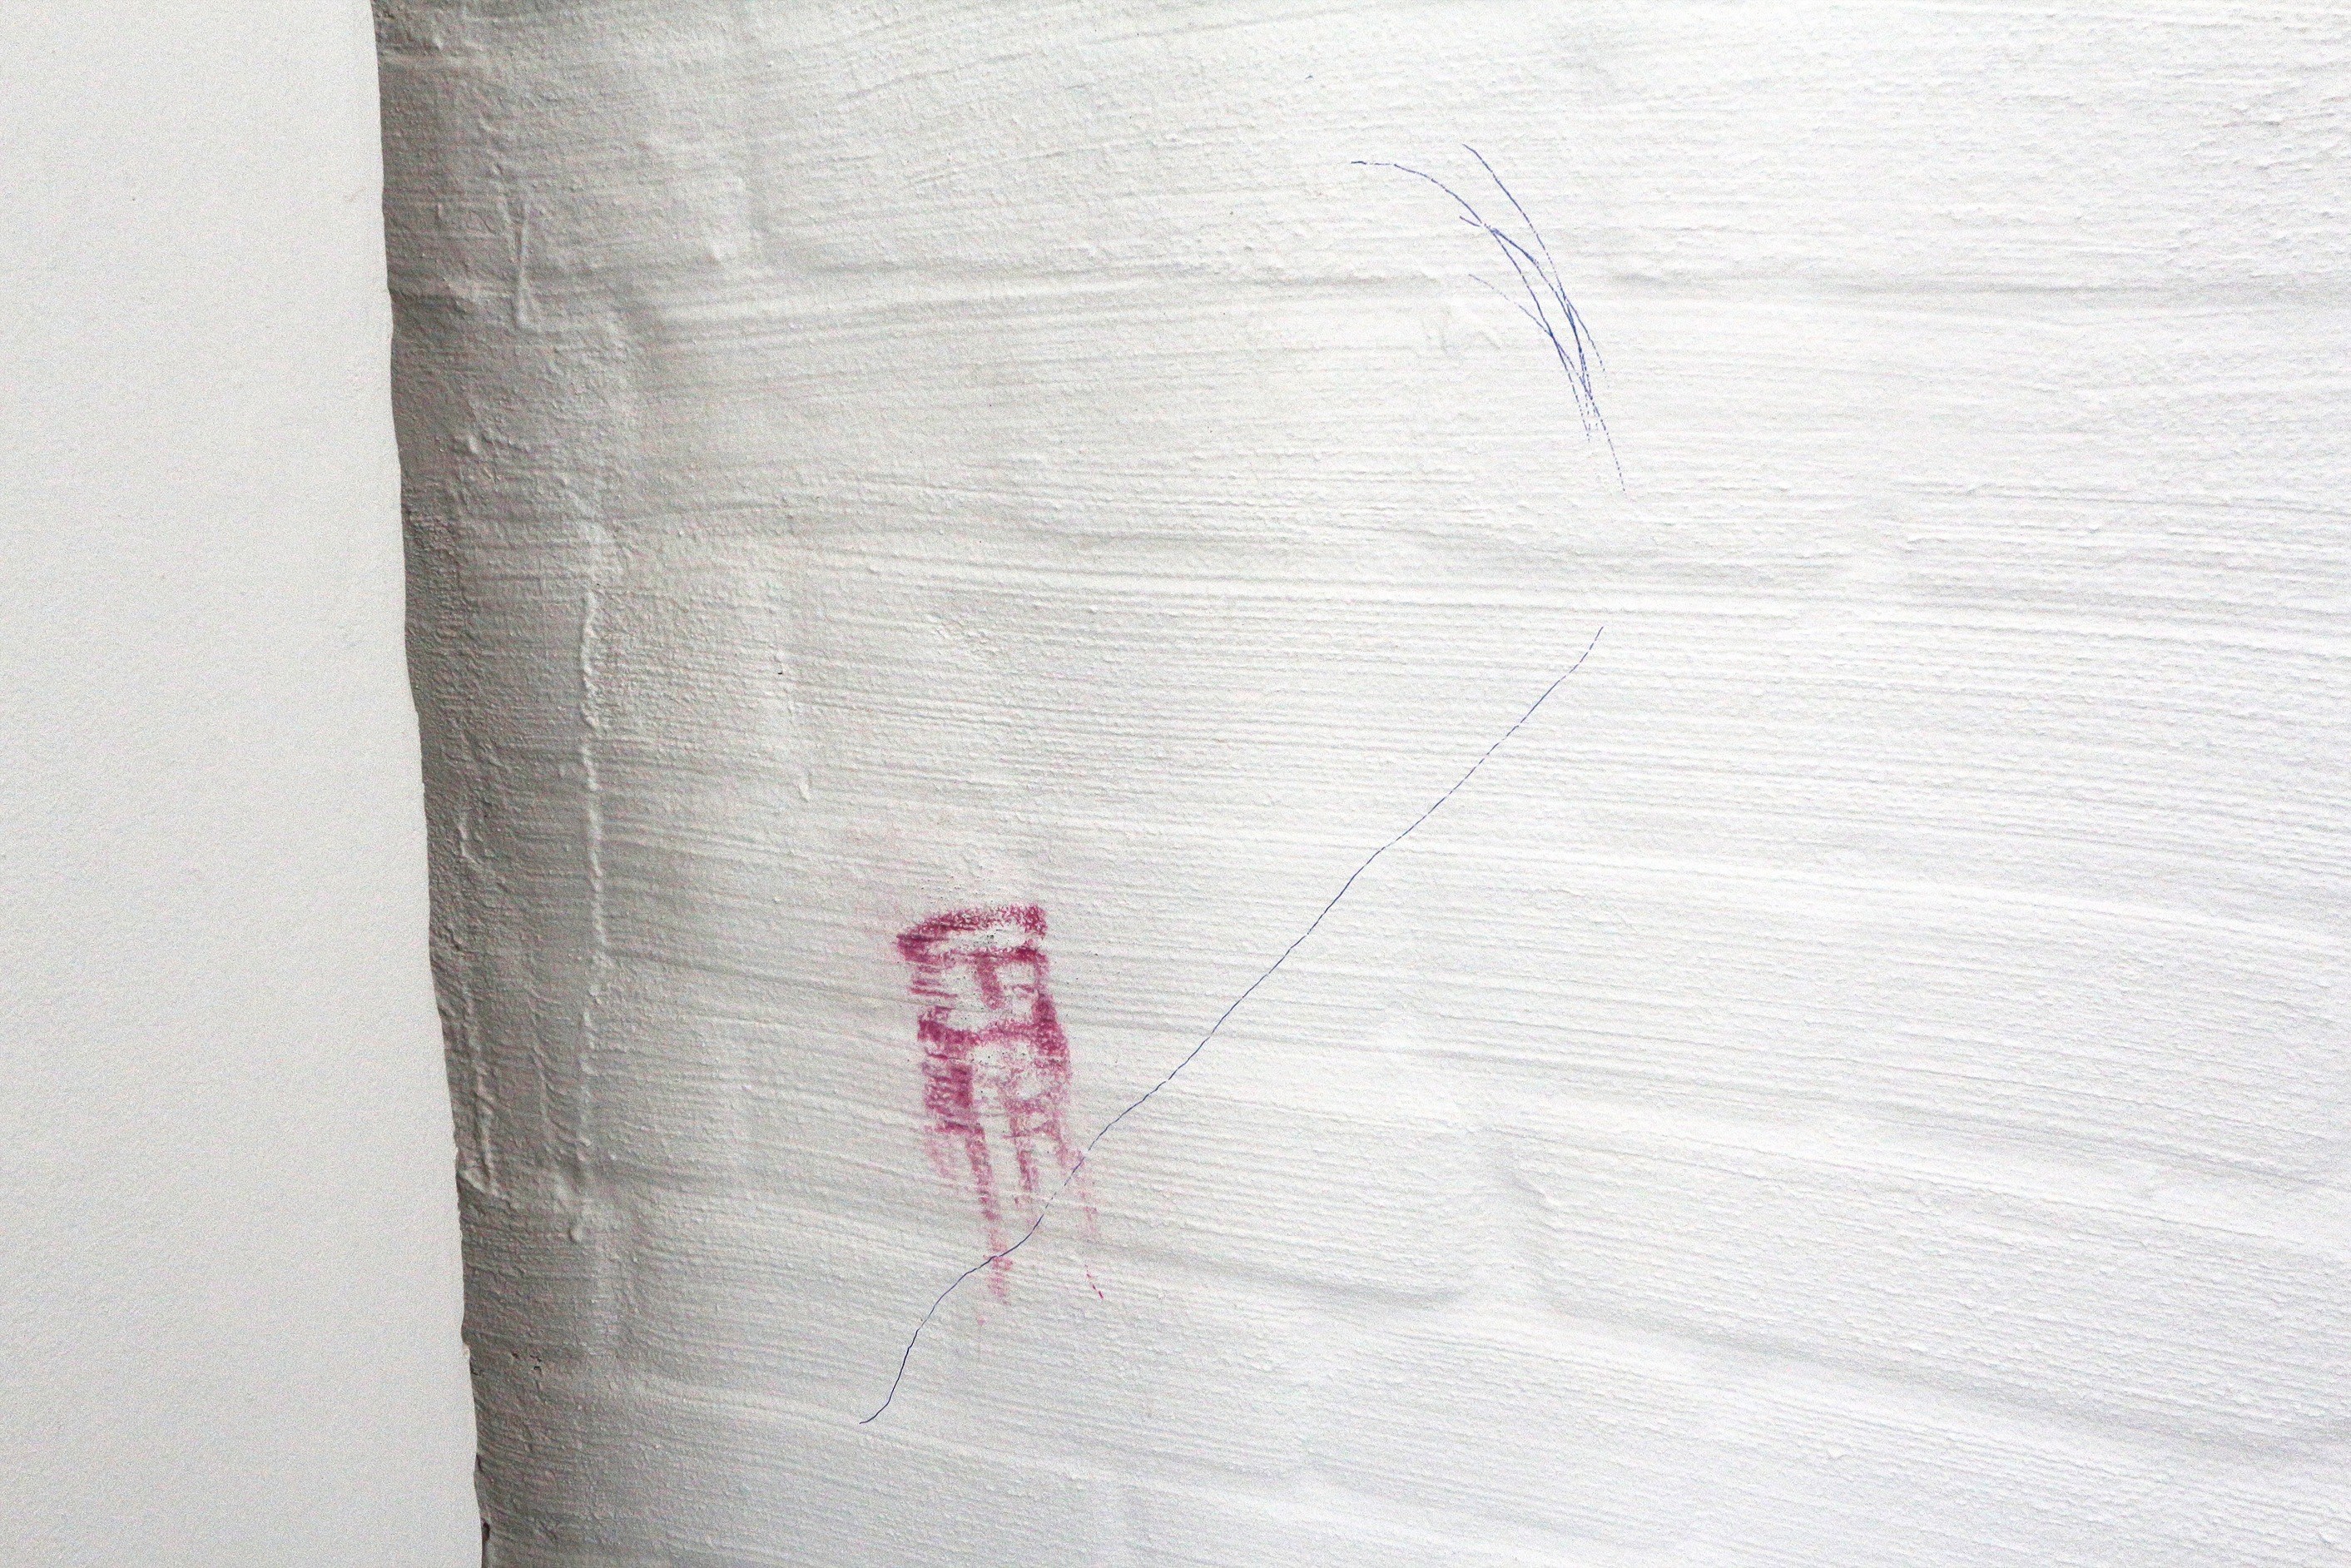 Kristina Sedlerova Villanen: Ricochet, tube and less, 2022; Traces on the walls, floor and paper; Rust, graphite, pigment, soap, lipstick, blue pen; Variable sizes